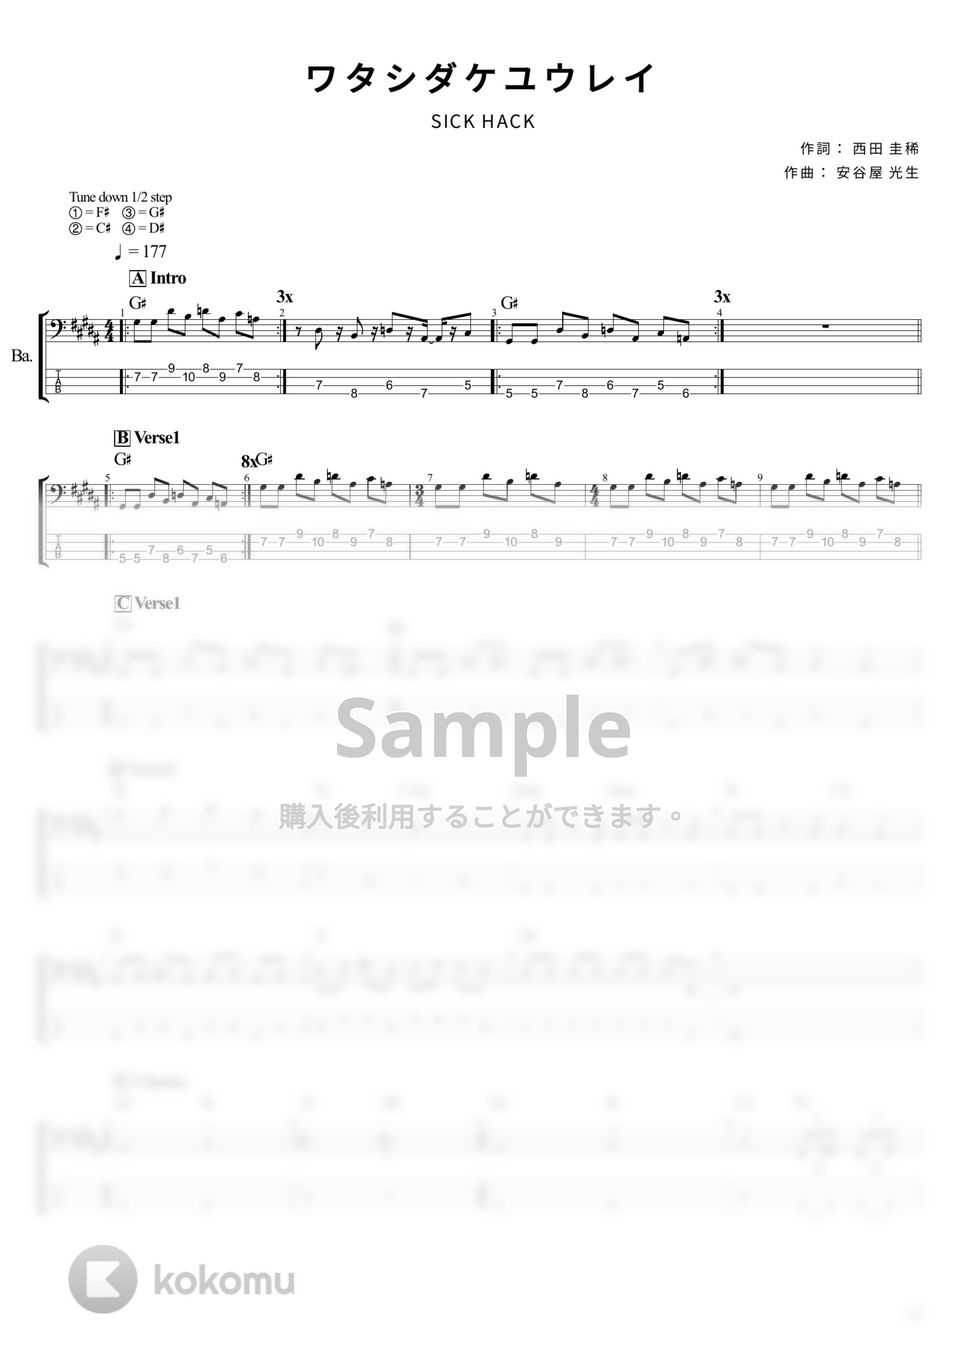 SICK HACK - ワタシダケユウレイ (ベース Tab譜 4弦) by T's bass score